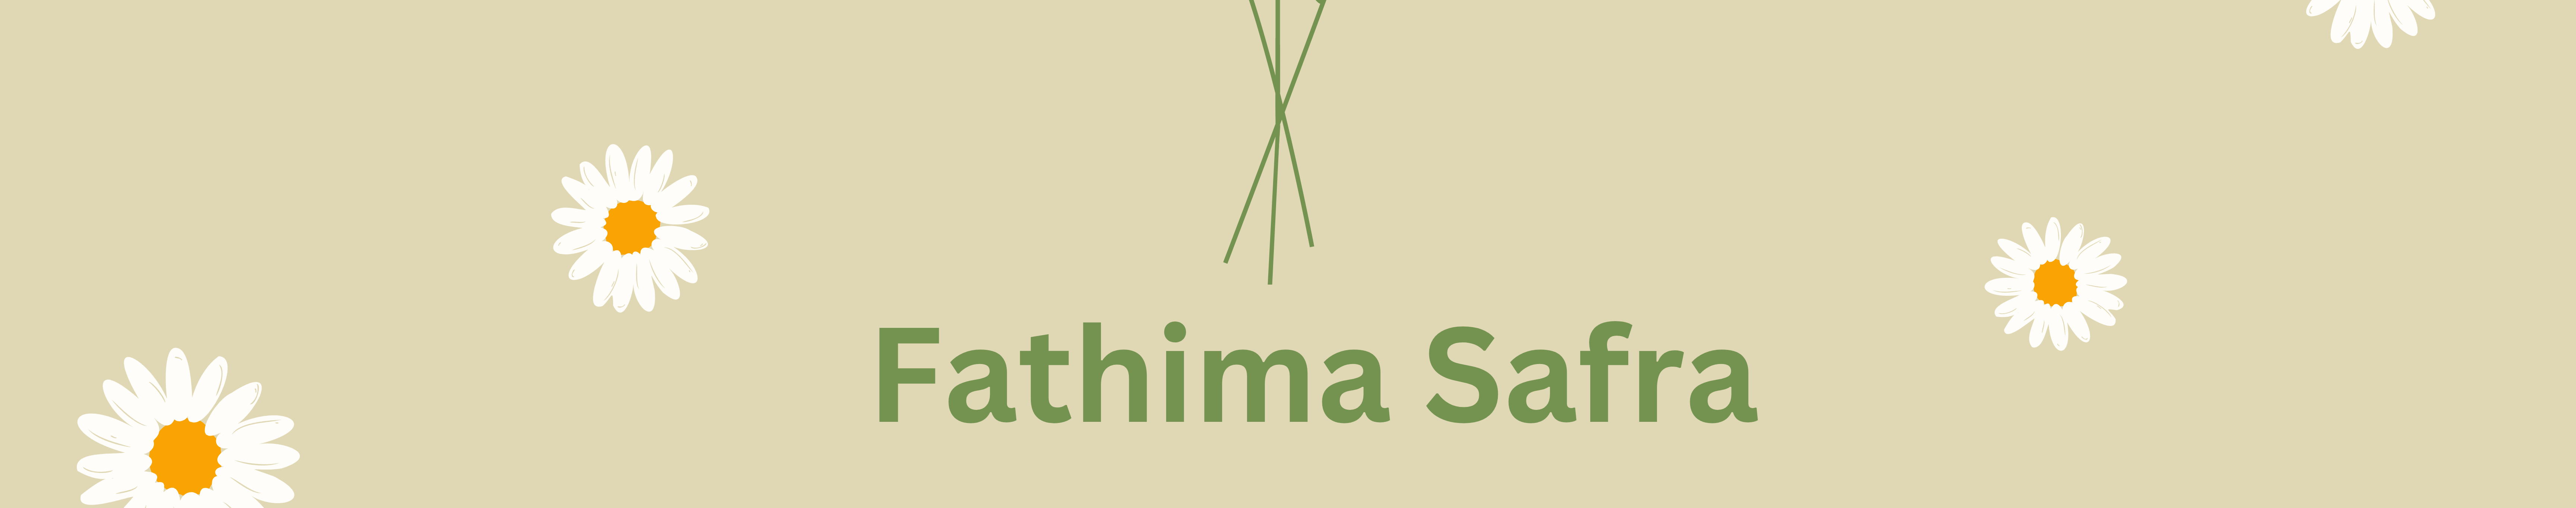 Fathima Safra's profile banner